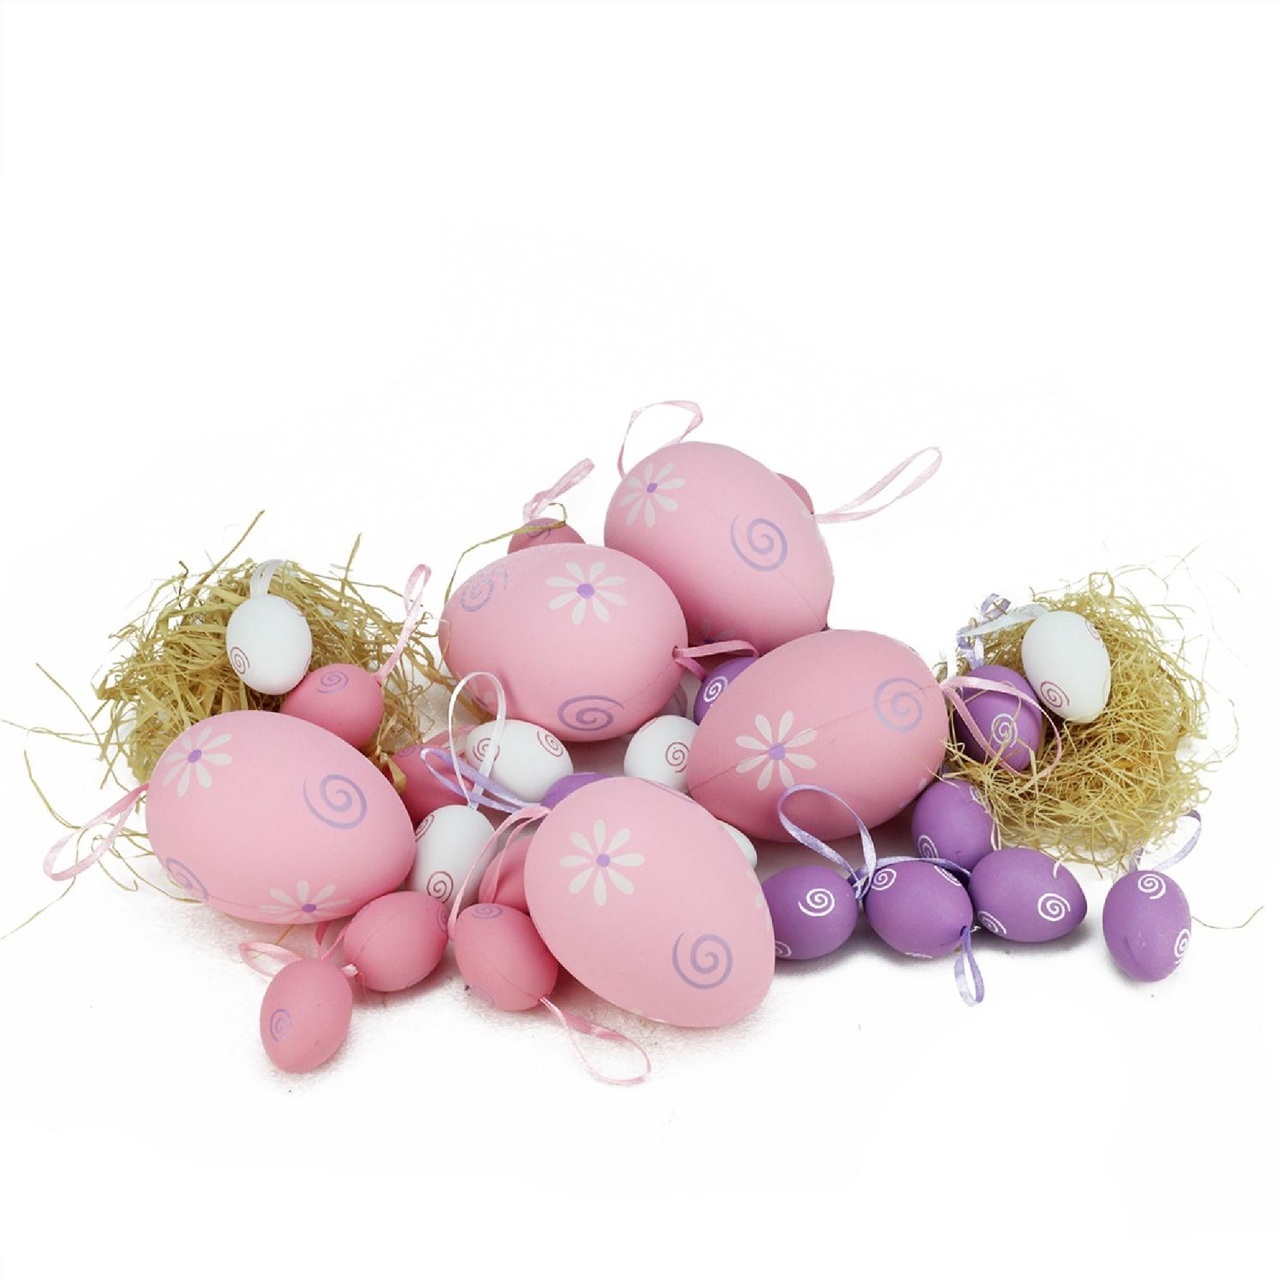 Pink Easter Egg Decorations